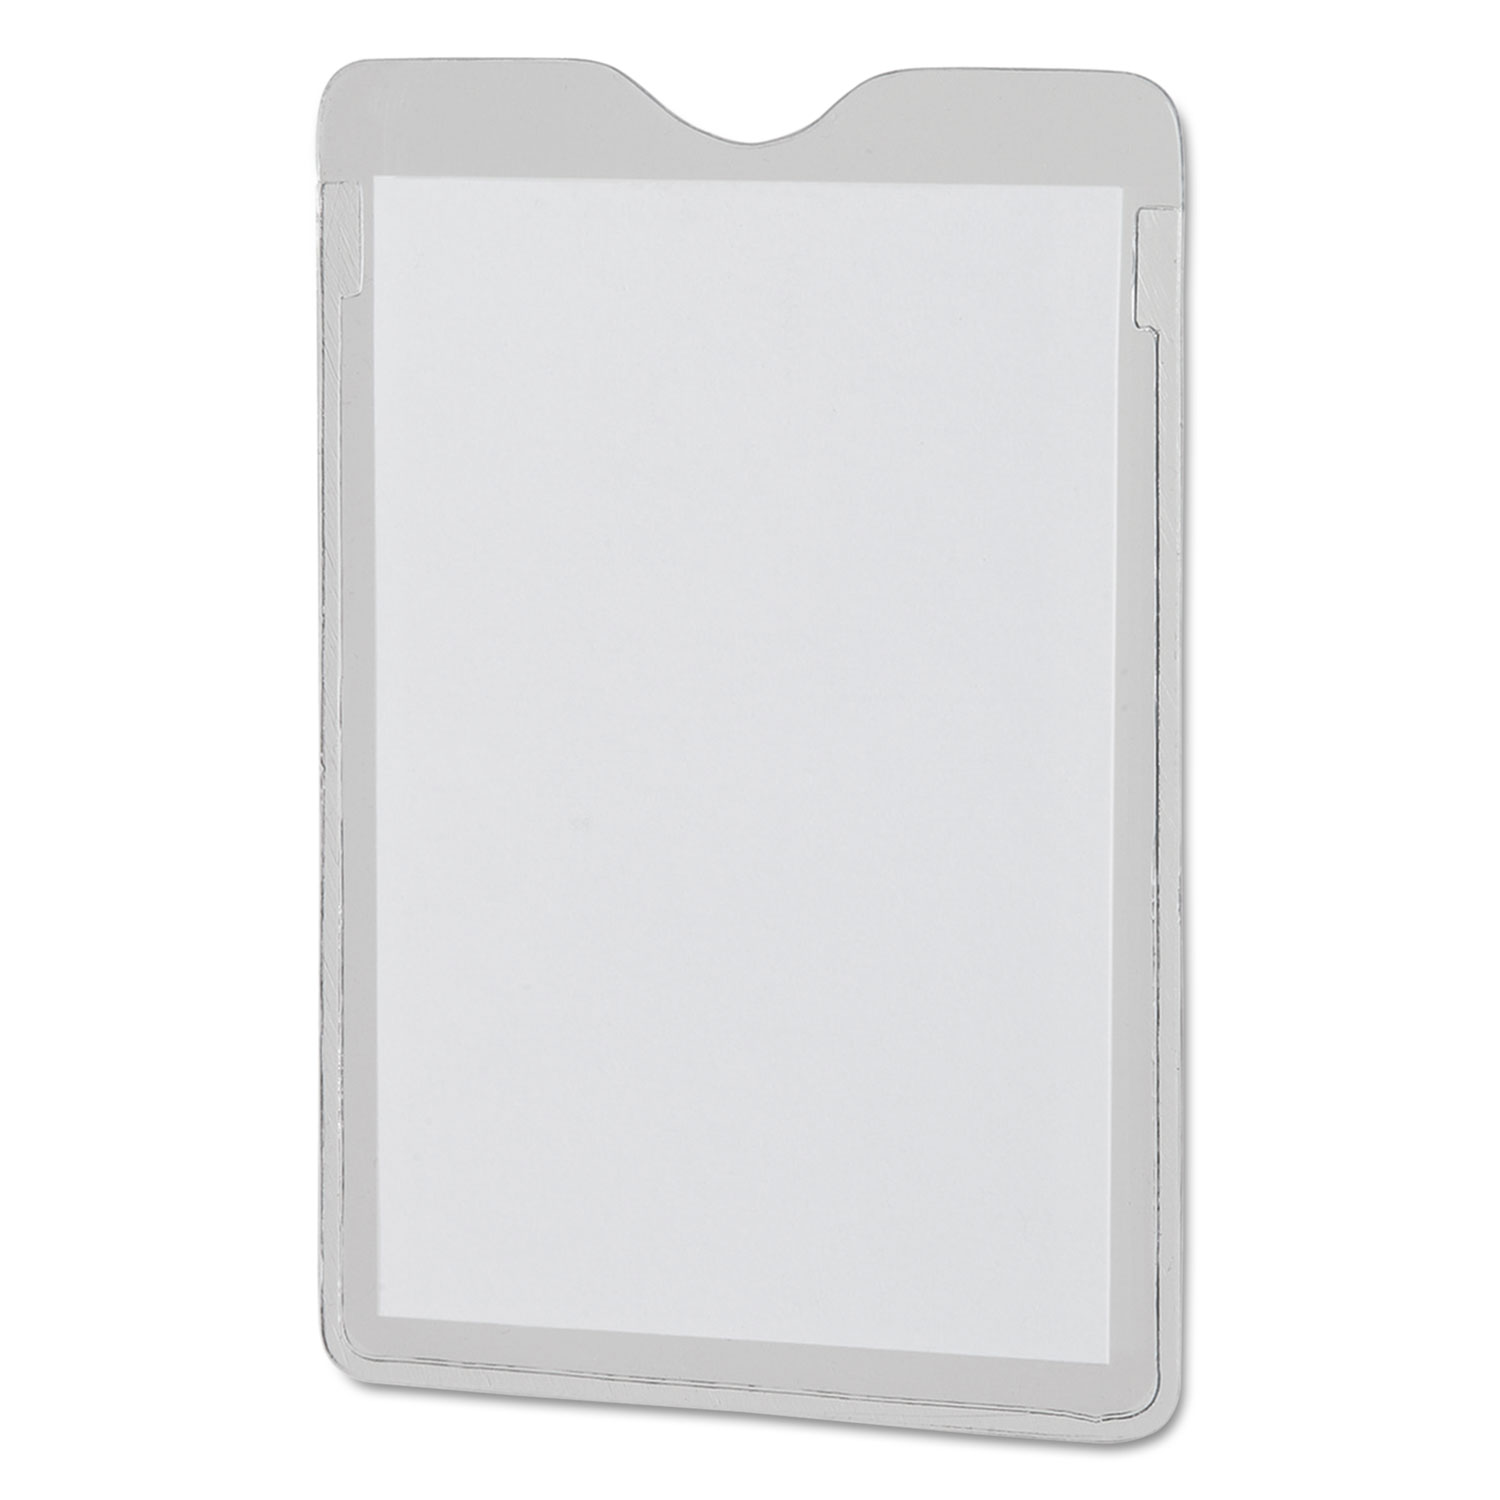  Oxford 65003EE Utili-Jac Heavy-Duty Clear Plastic Envelopes, 2 1/4 x 3 1/2, 50/Box (OXF65003) 